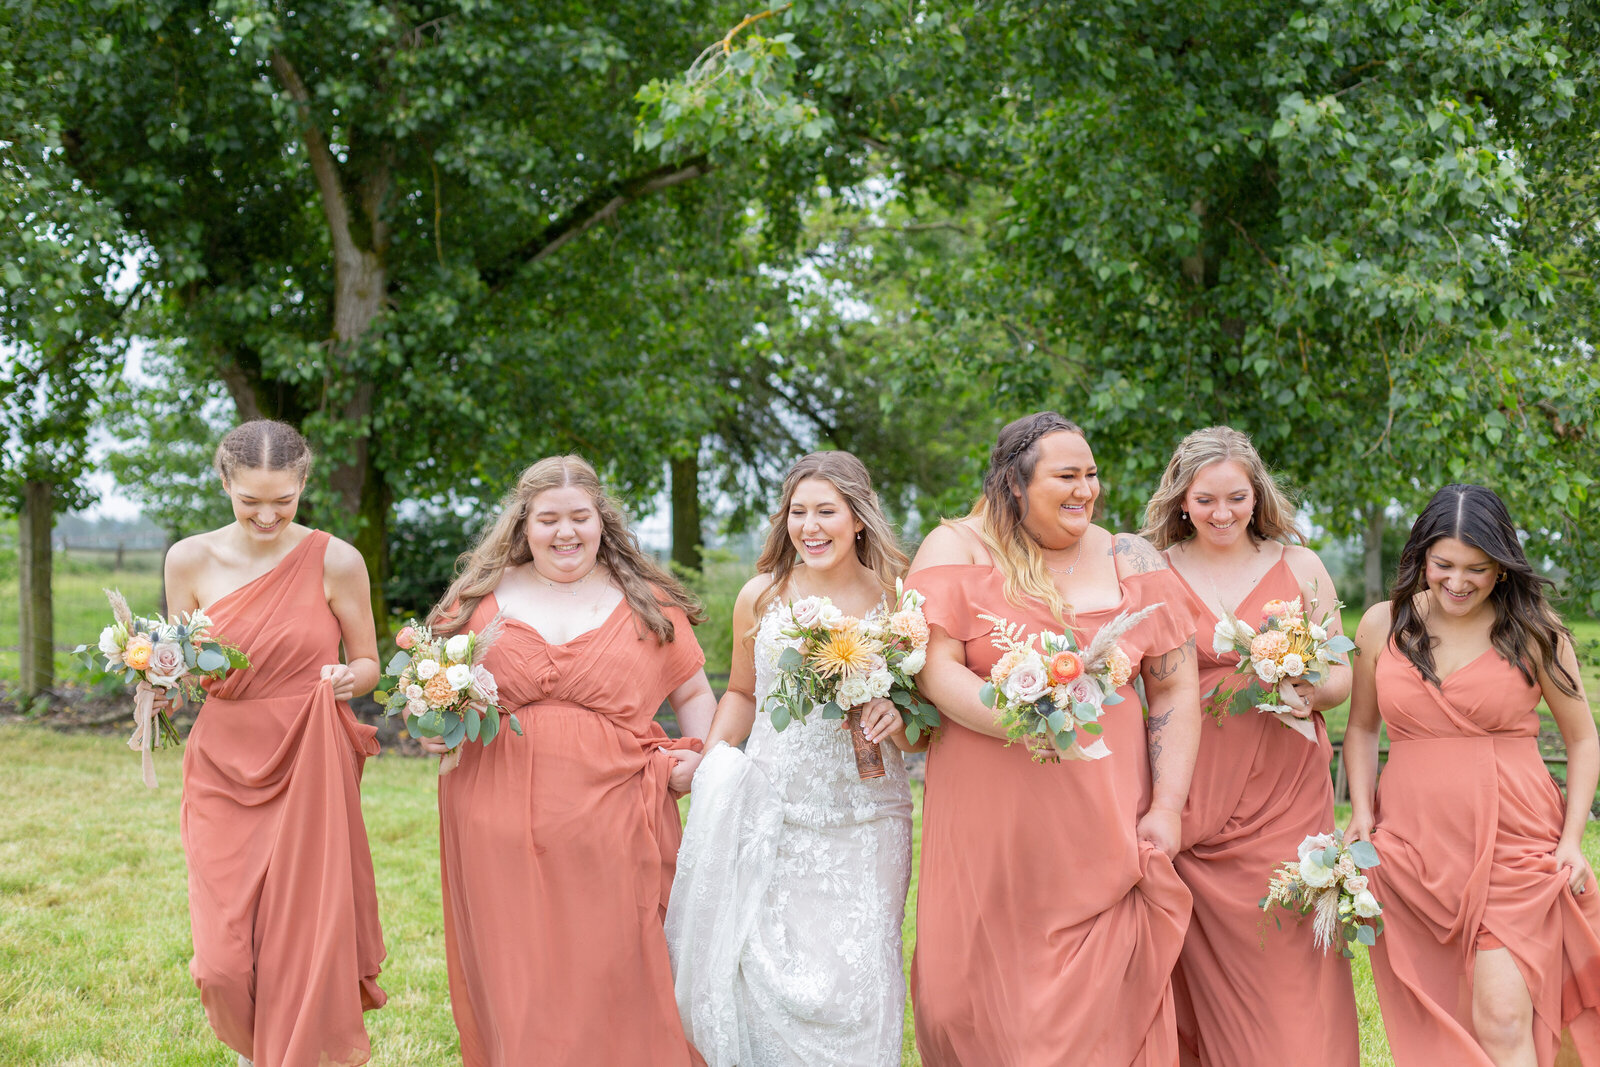 Idaho Falls Photographers capture bridal party walking with bride